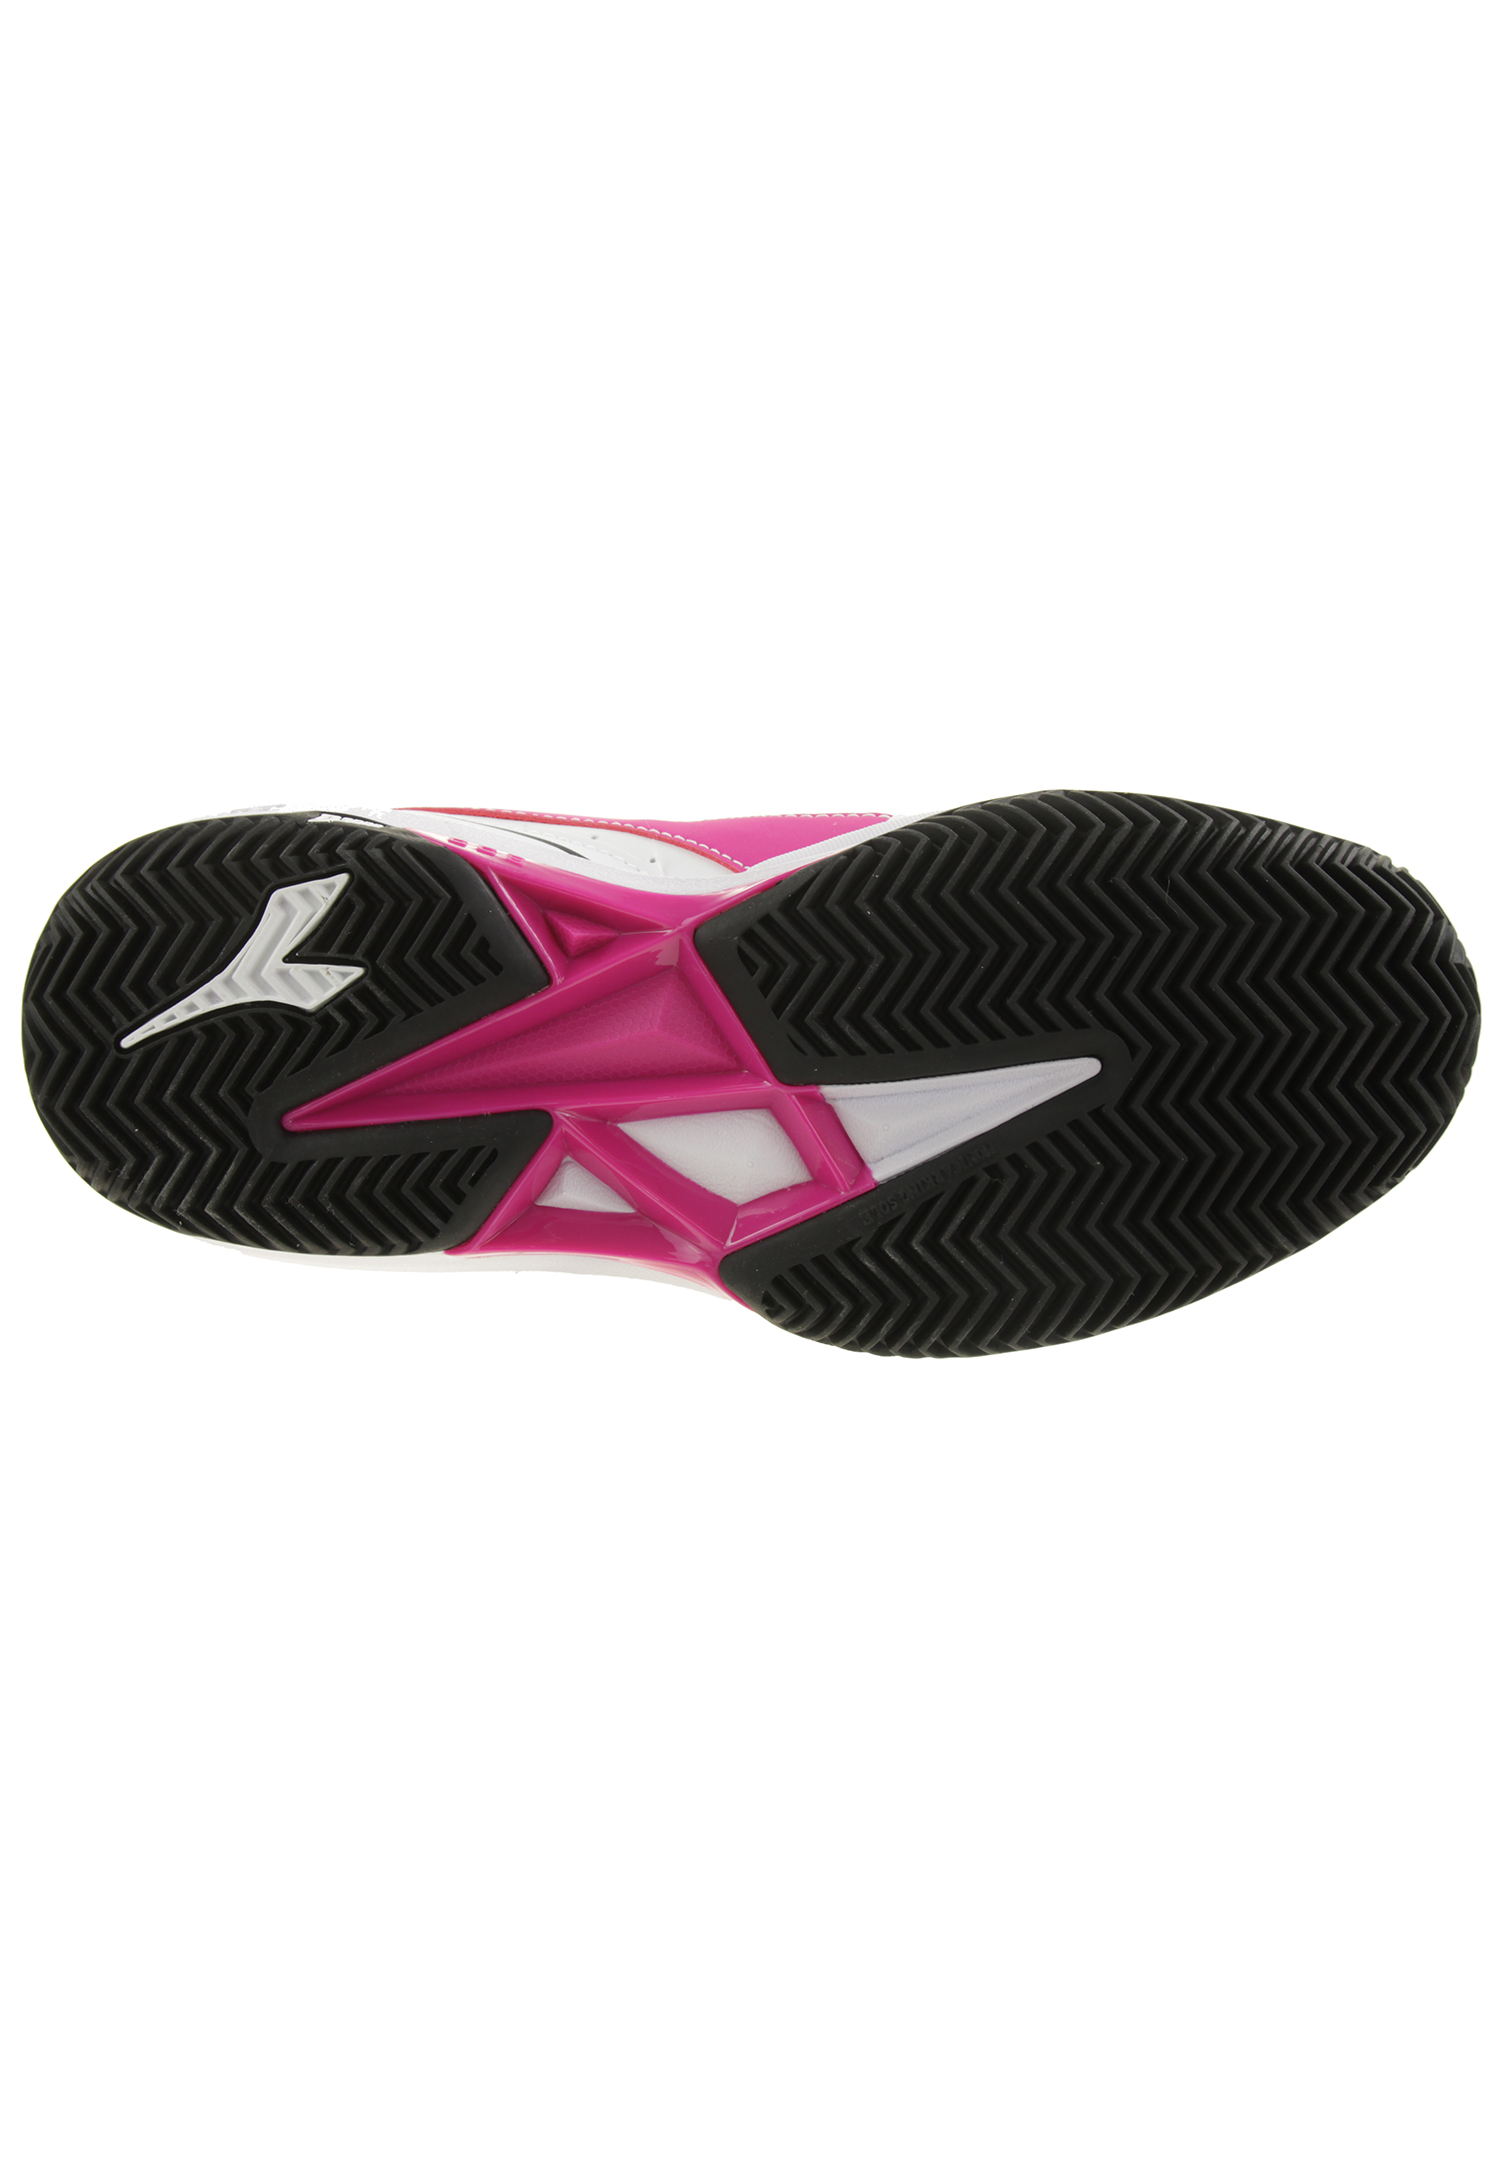 Diadora S. Challenge 4 W SL CLAY Damen Sneaker Tennisschuh 101.17811201 Weiß/Pink 